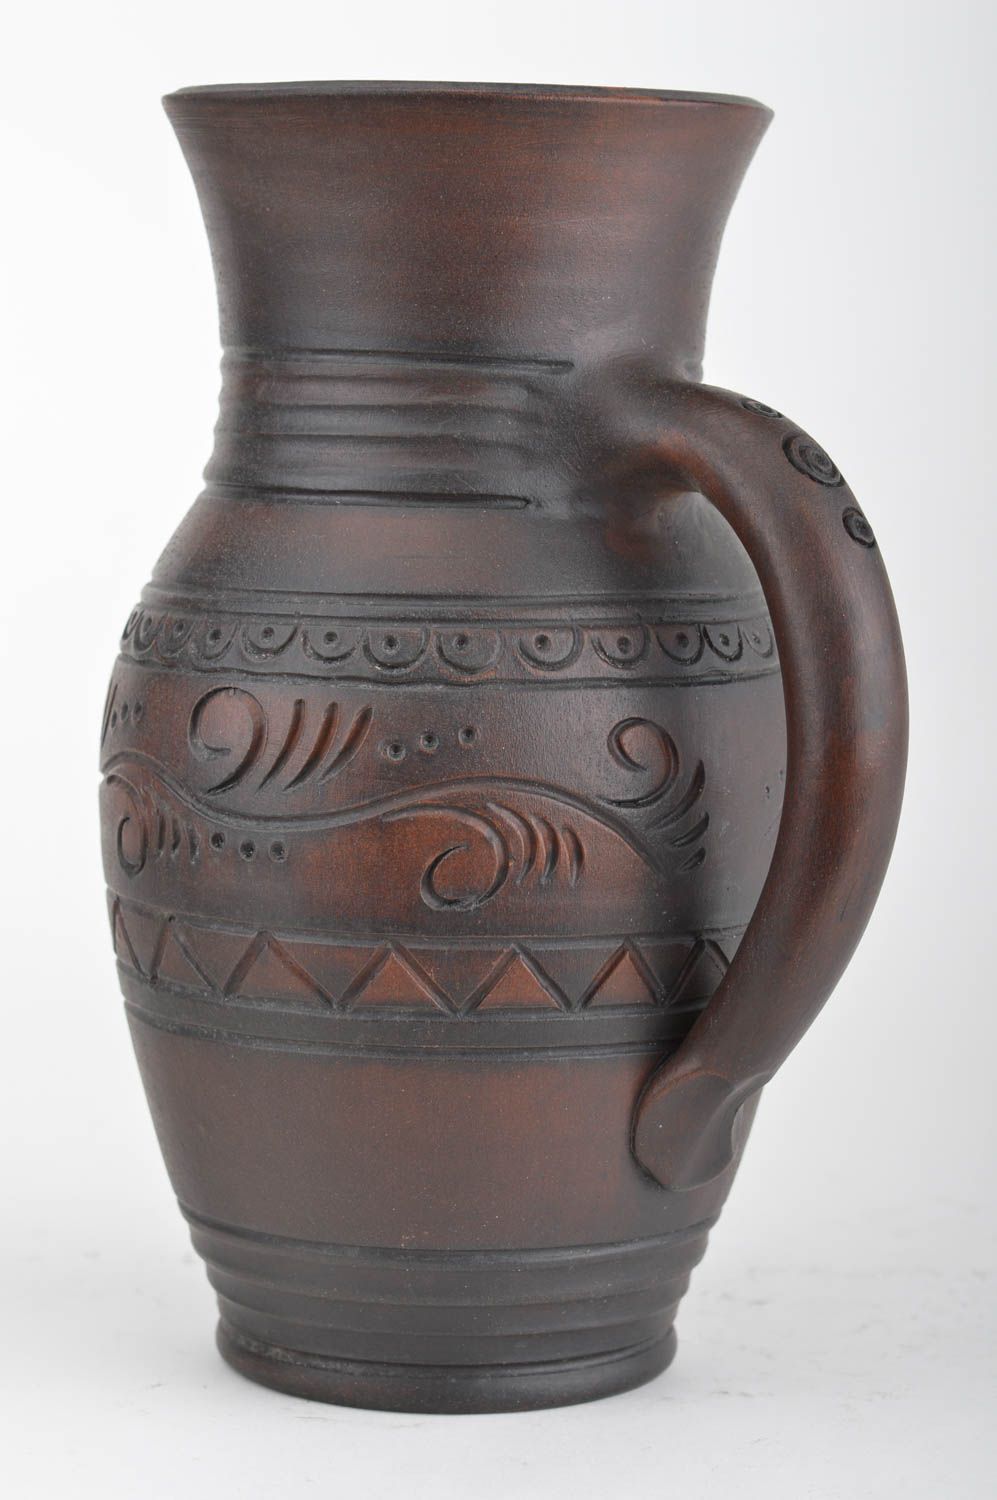 60 oz dark brown ceramic handmade water jug with handle in classic style 2 lb photo 5